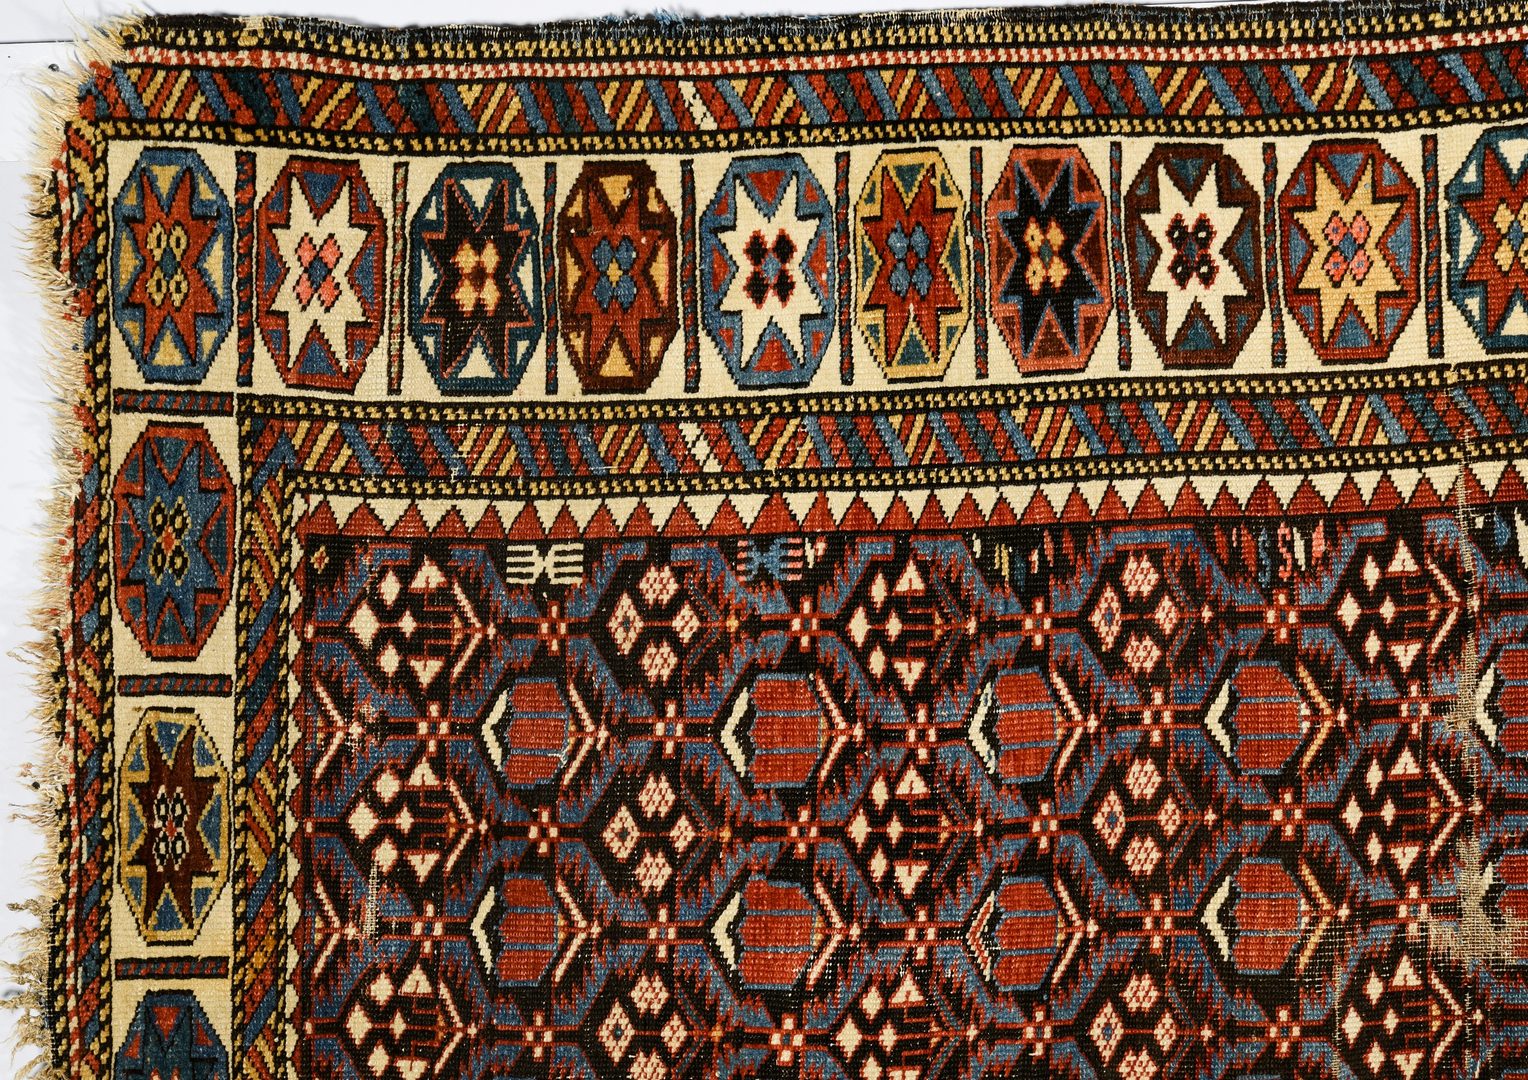 Lot 374: Antique Persian Kuba area rug, 3'7" x 5'4"